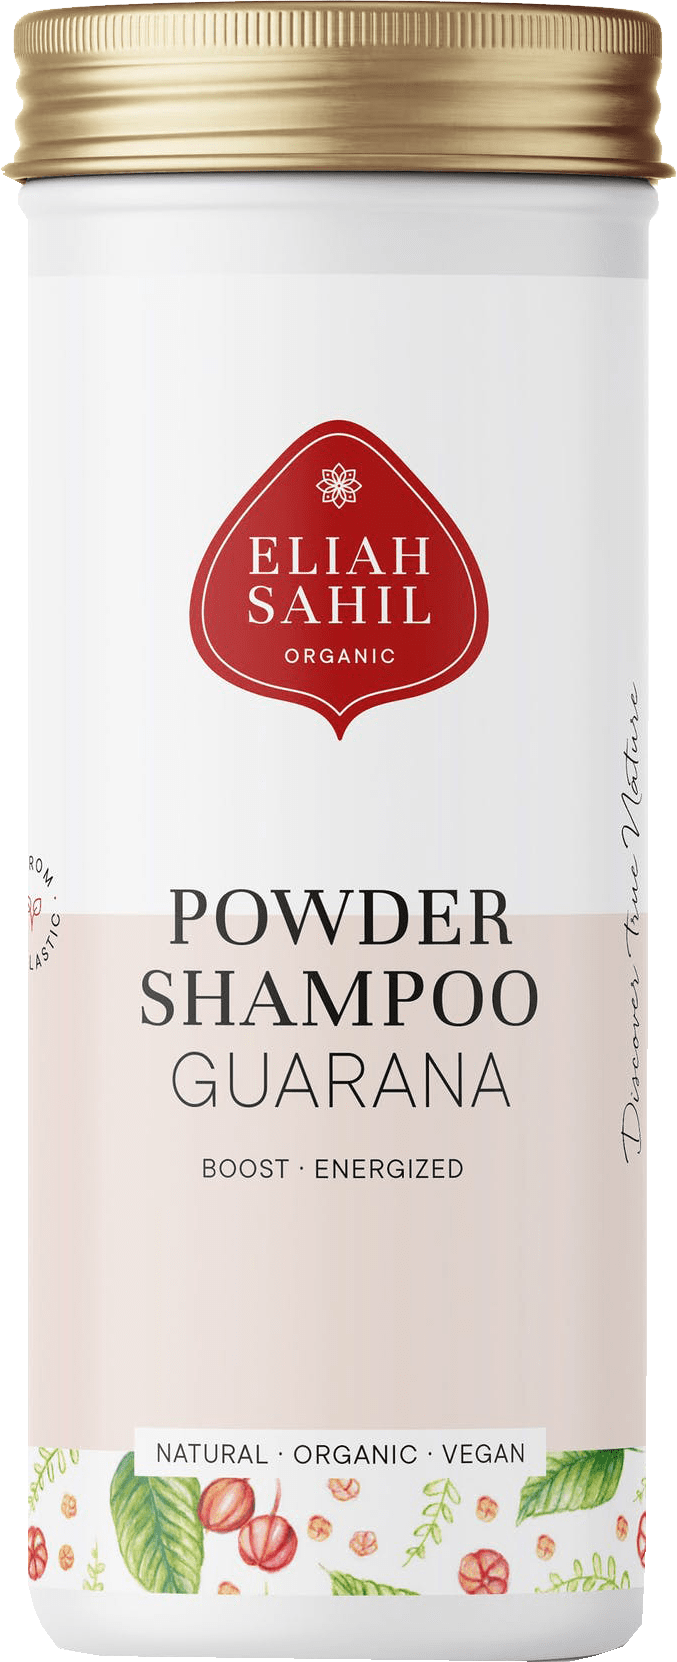 Eliah Sahil Shampoo Guarana bei Haarausfall und fettigem Haar ohne Hintergrund